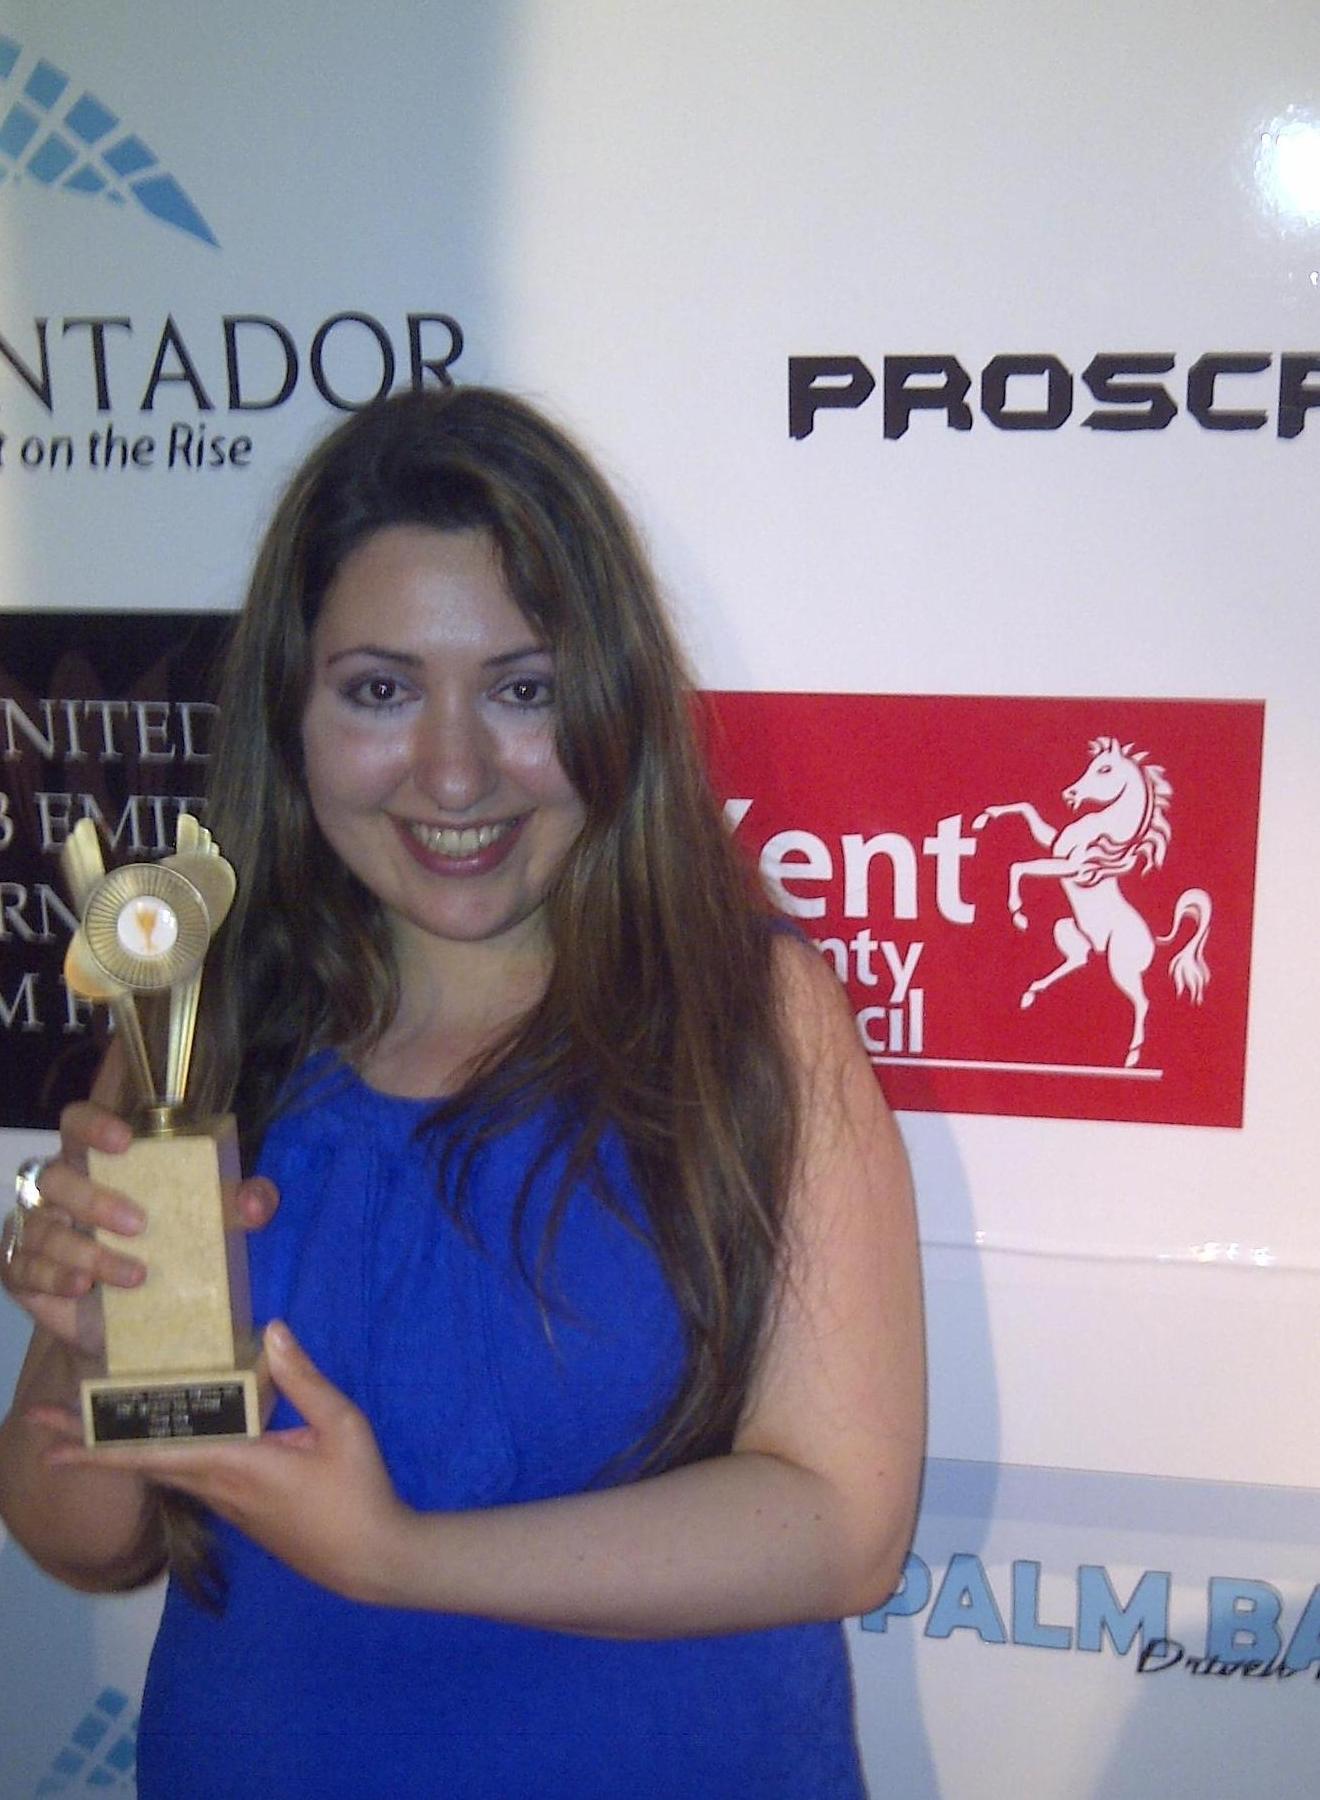 MOST ASPIRING NEW ACTRESS AWARD at the International Filmmaker Film Festival, UK, 2011, for: Three Veils.